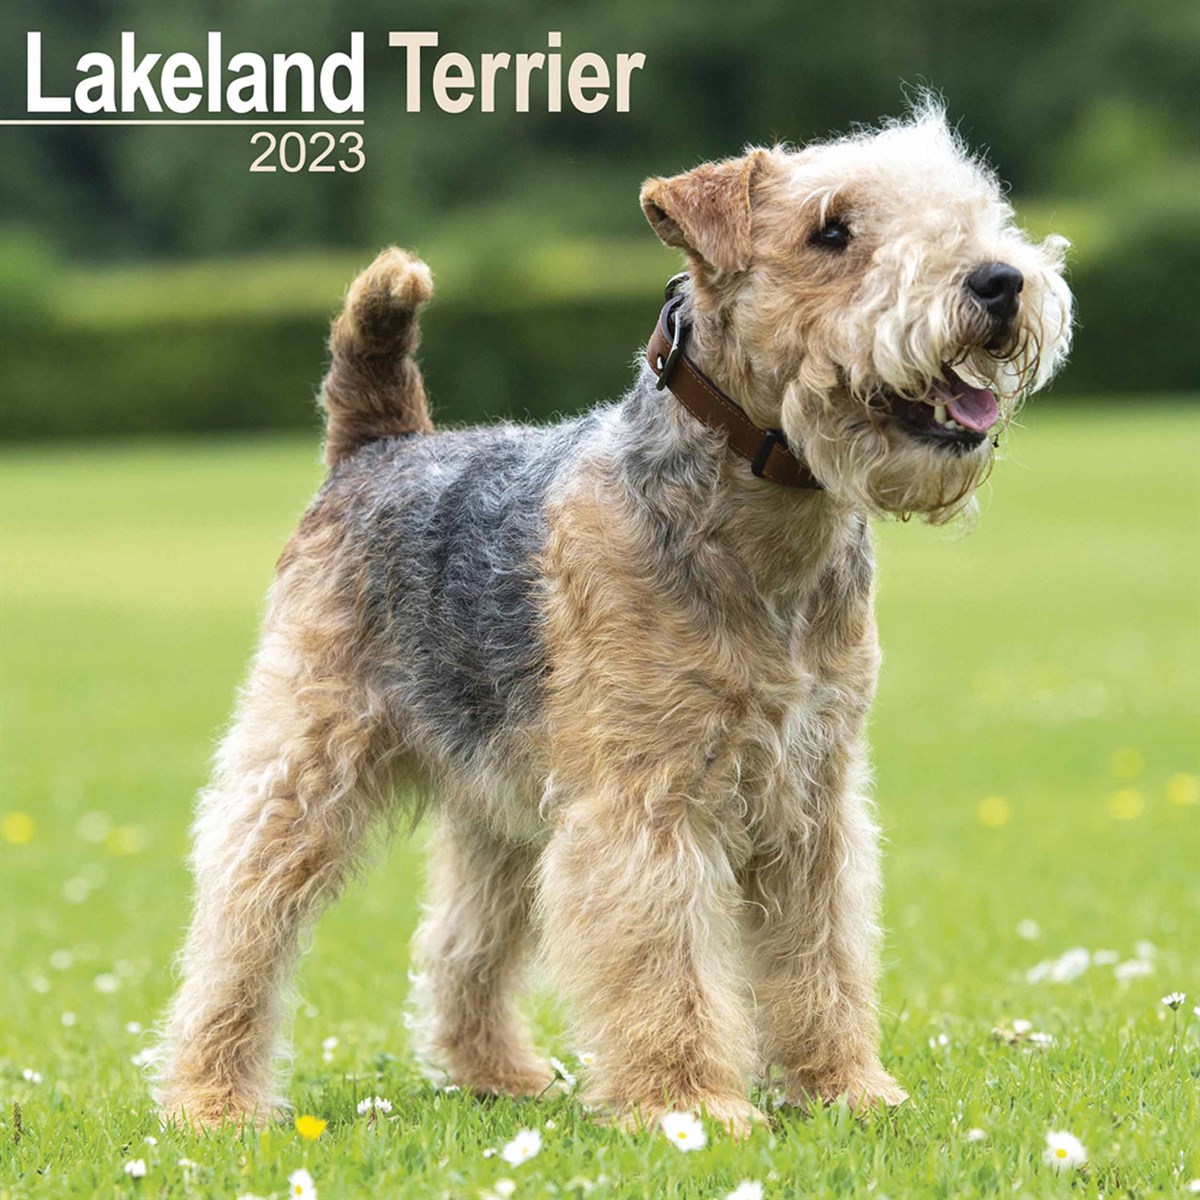 Lakeland Terrier 2023 Calendars